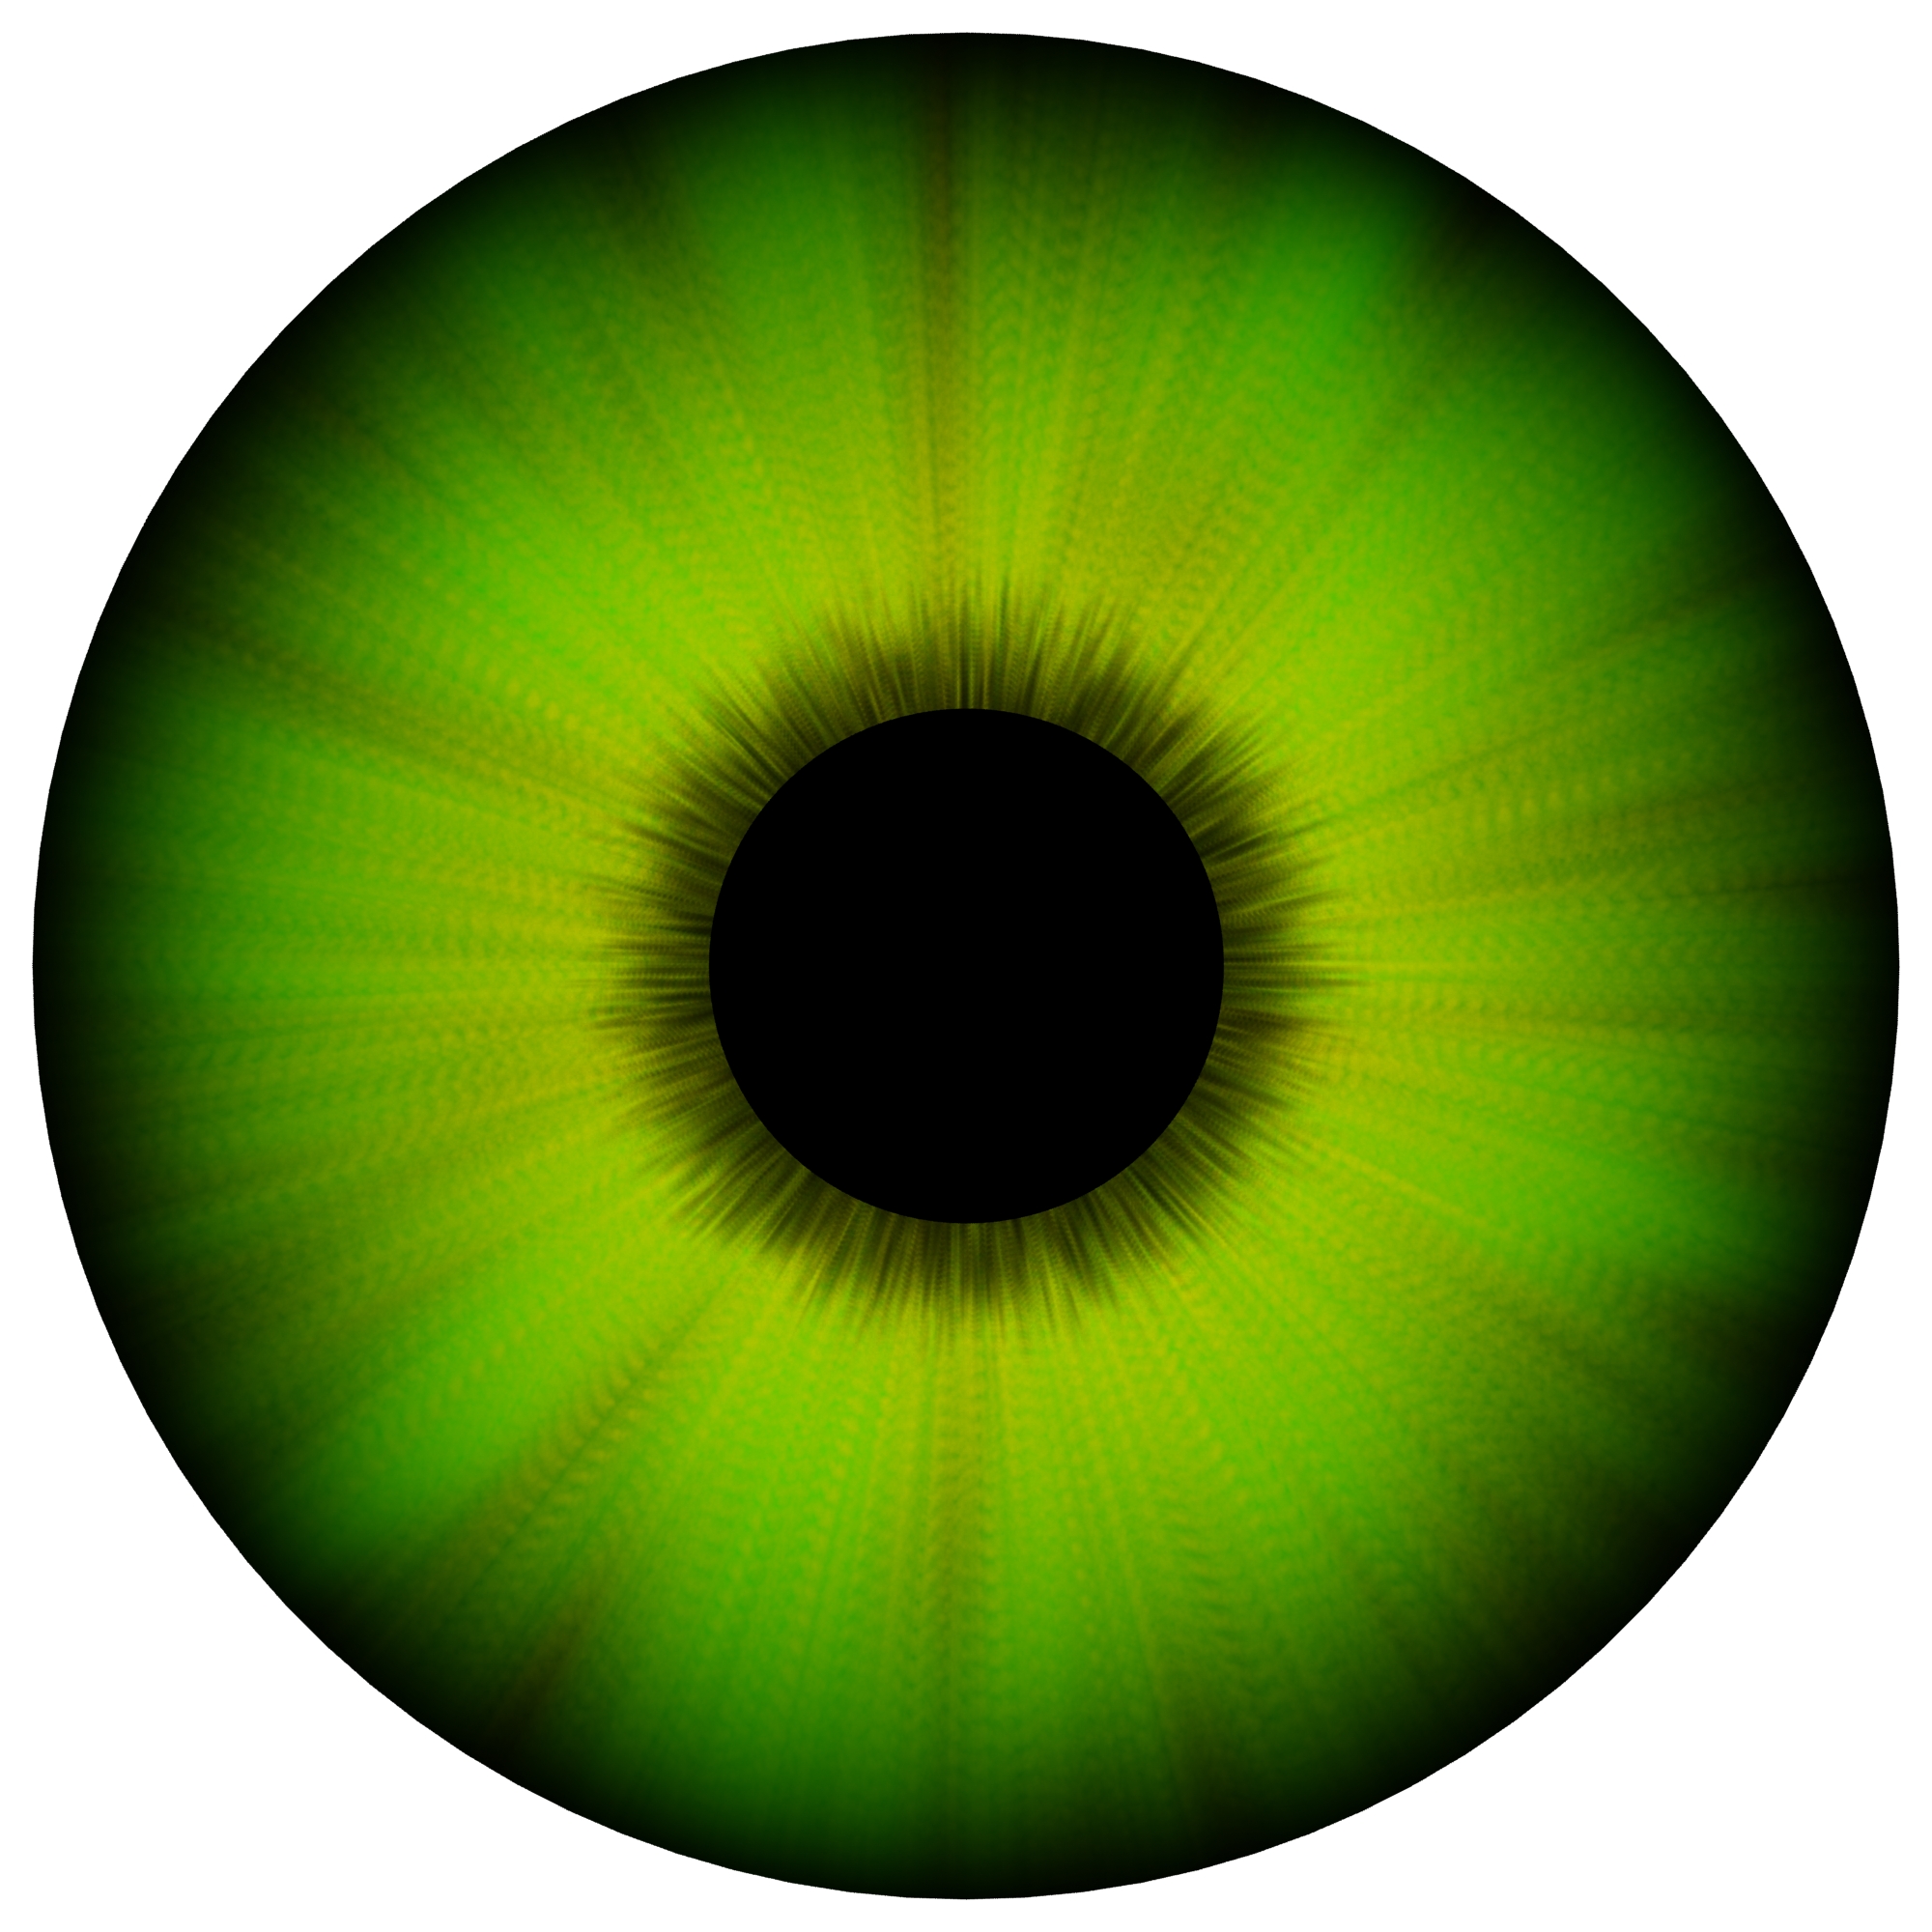 KIWI GREEN eye texture by 3DHitman on DeviantArt